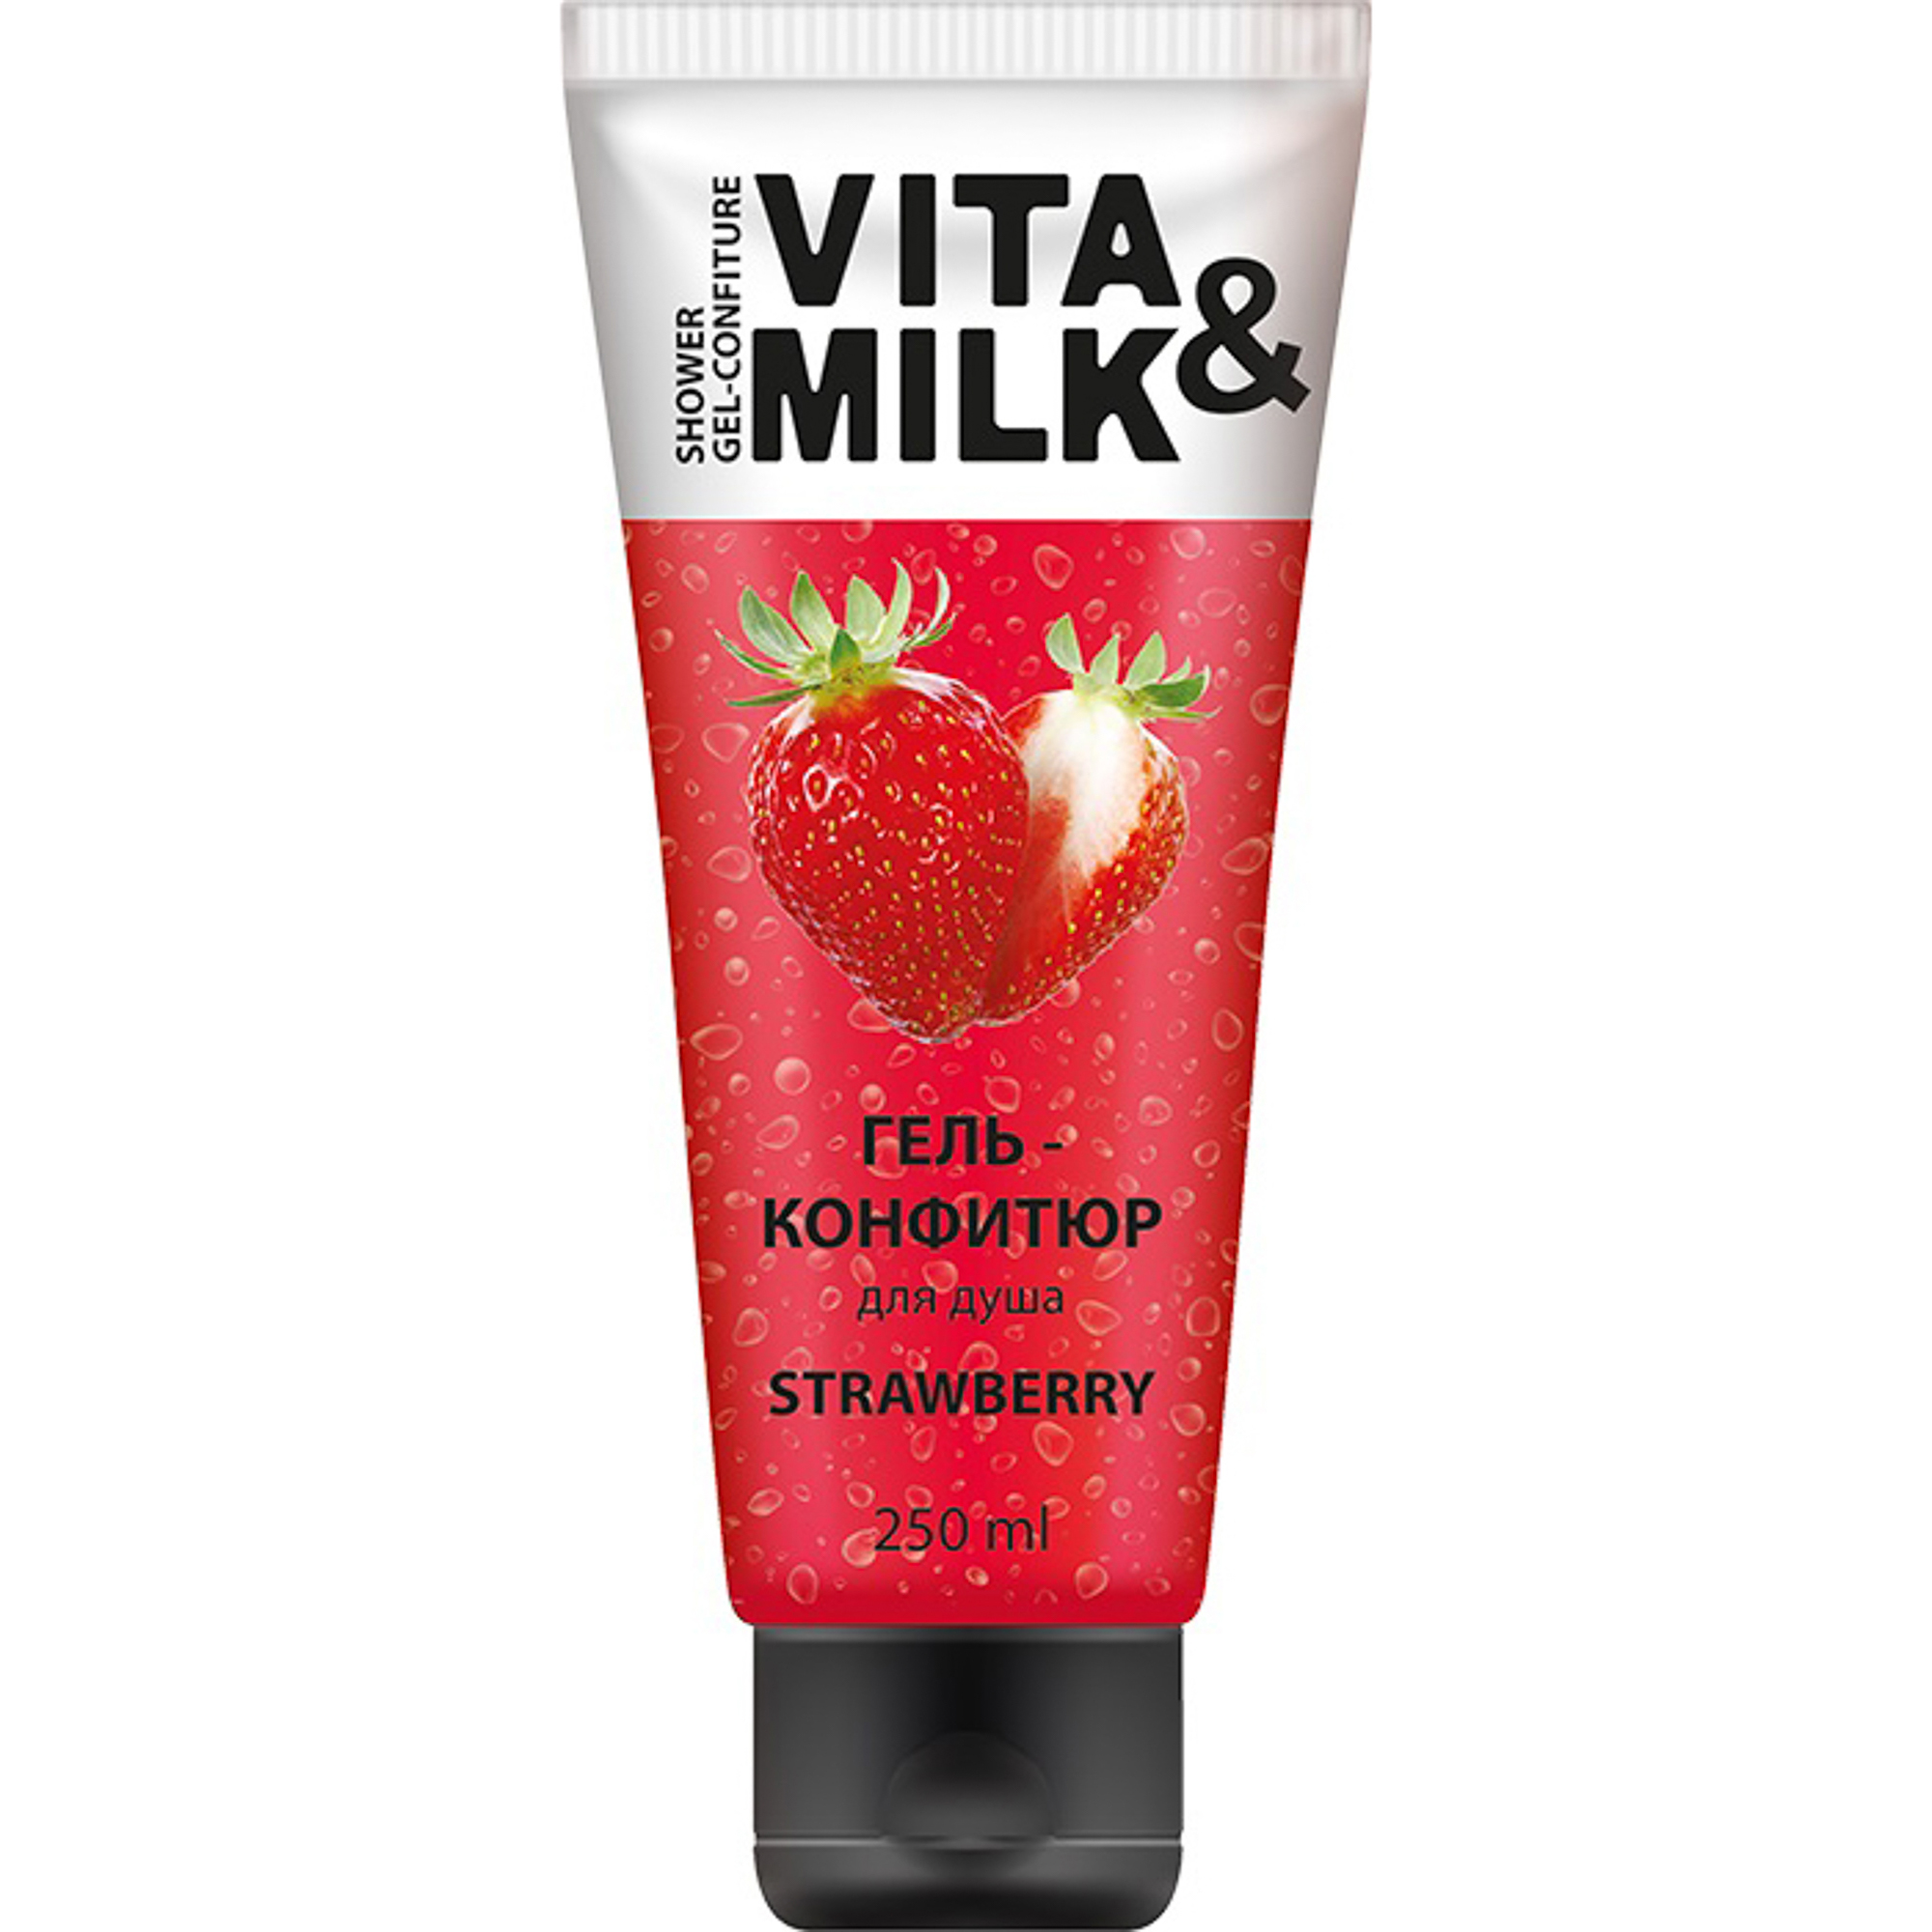 Vita gel. Гель-конфитюр для душа Vita & Milk клубника. Vita Milk гель для душа клубника.